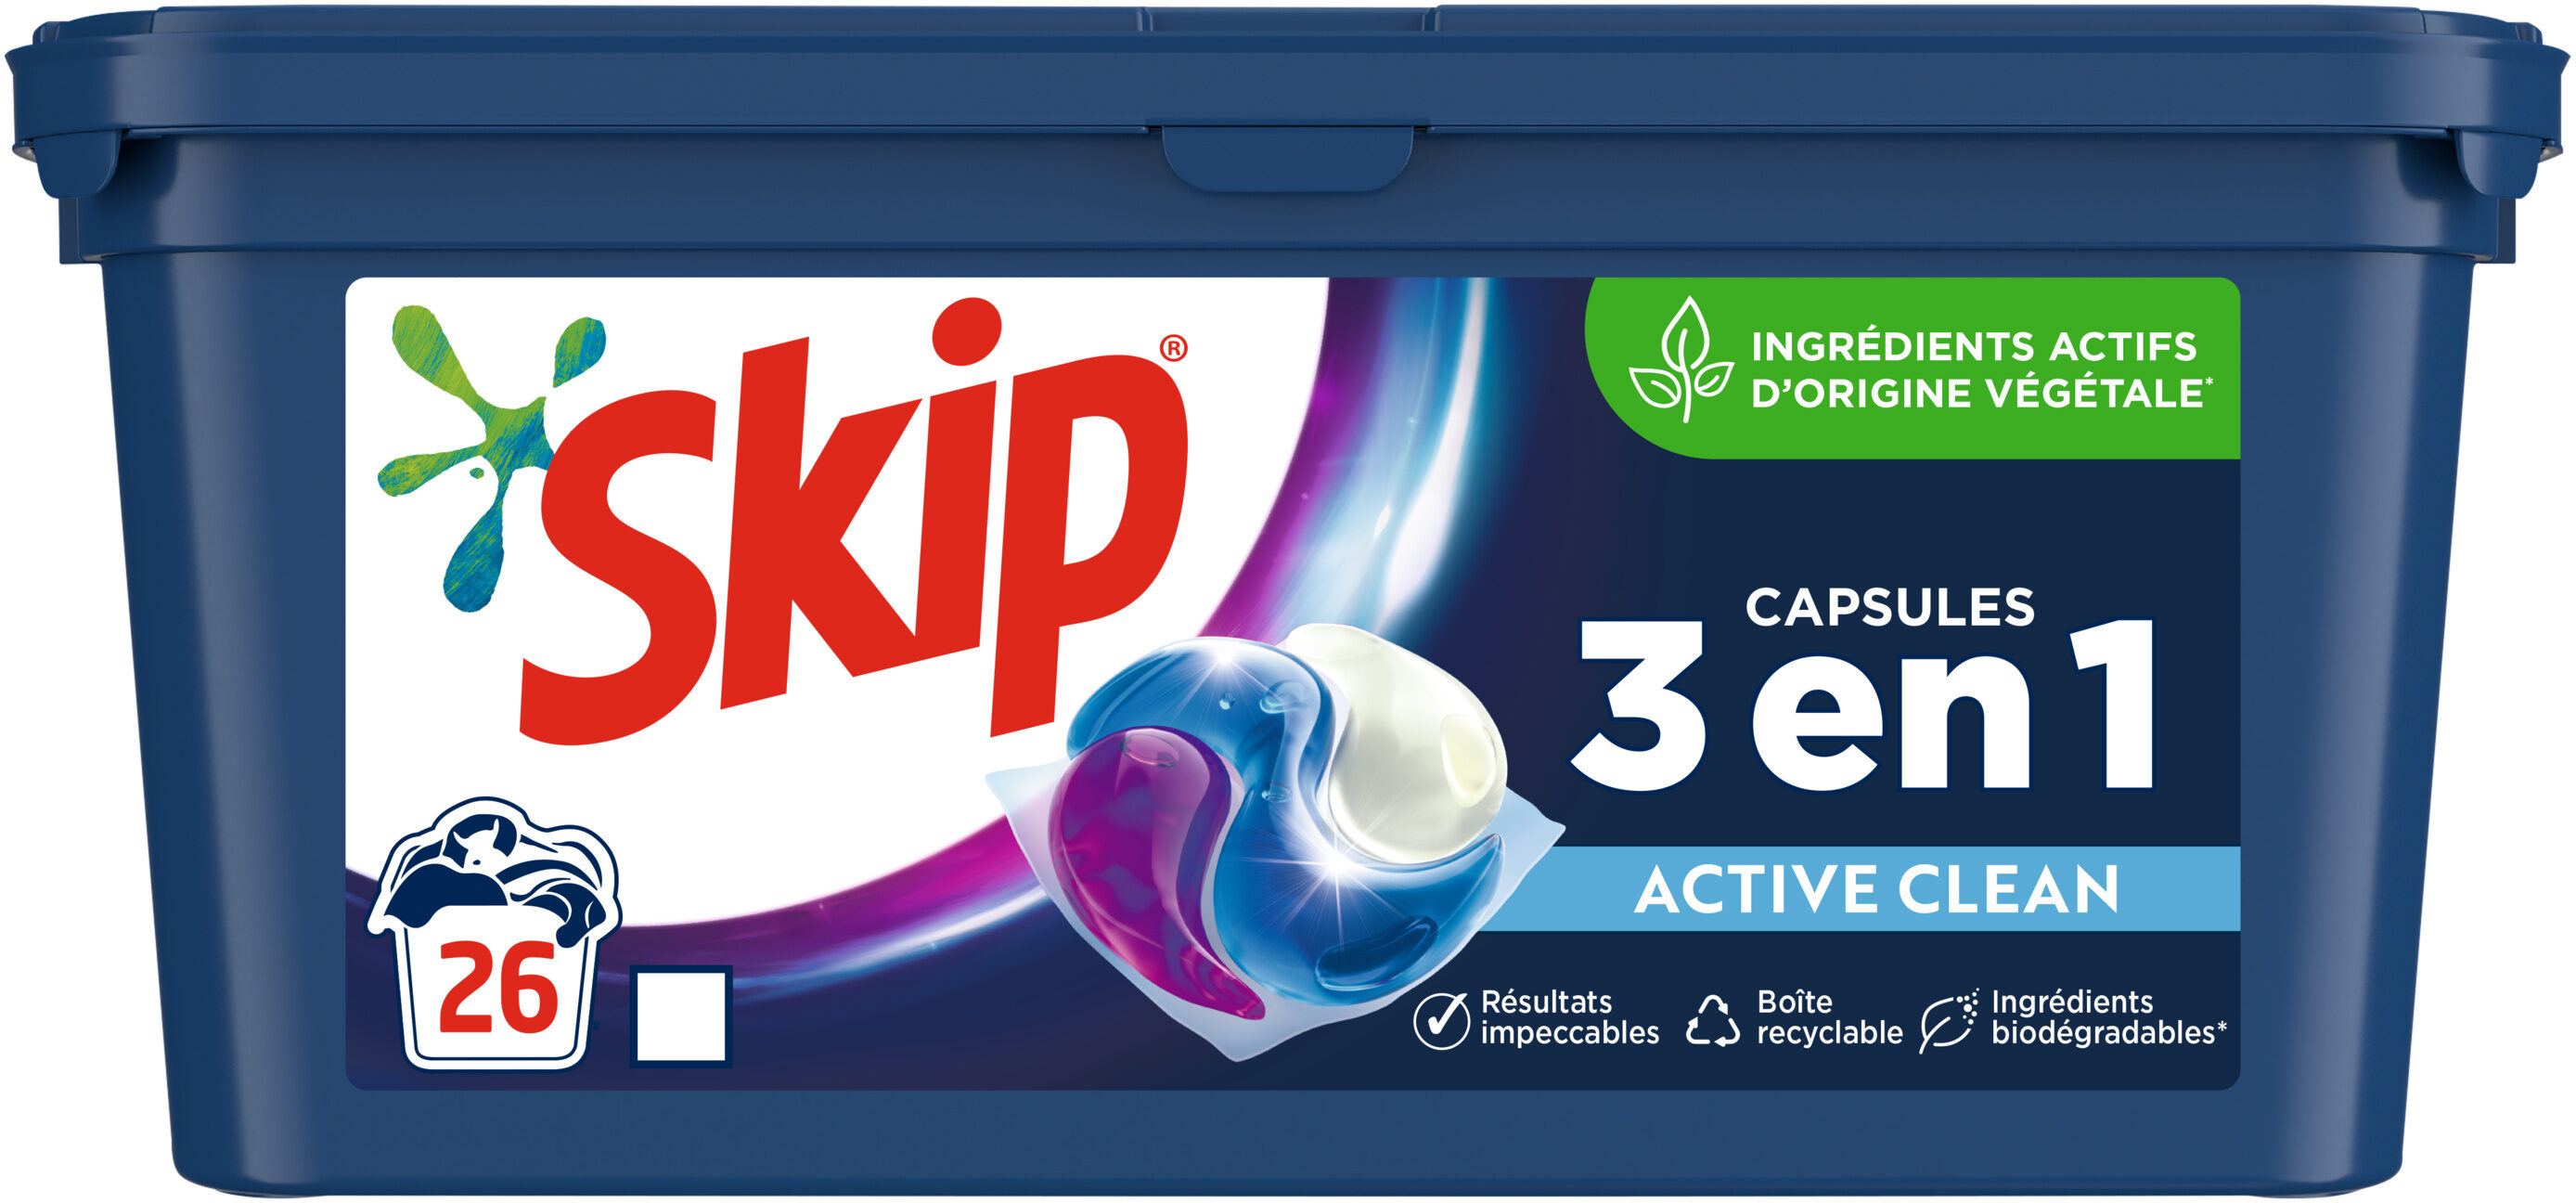 Skip caps 26w active trio - Product - fr